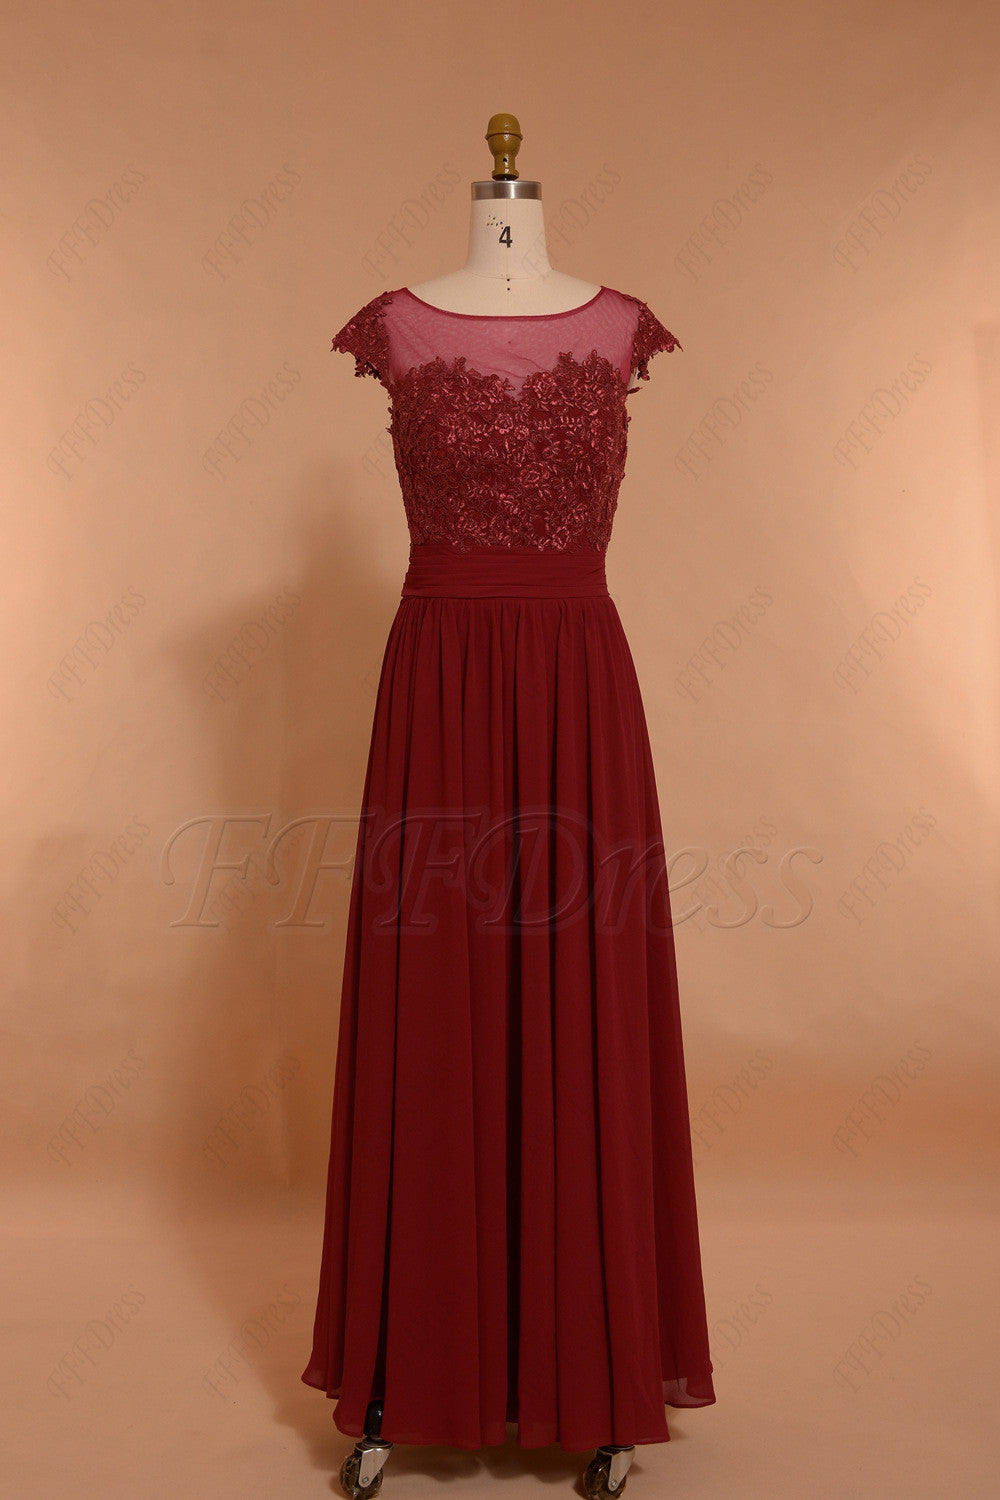 Burgundy Long Prom Dresses Cap Sleeves